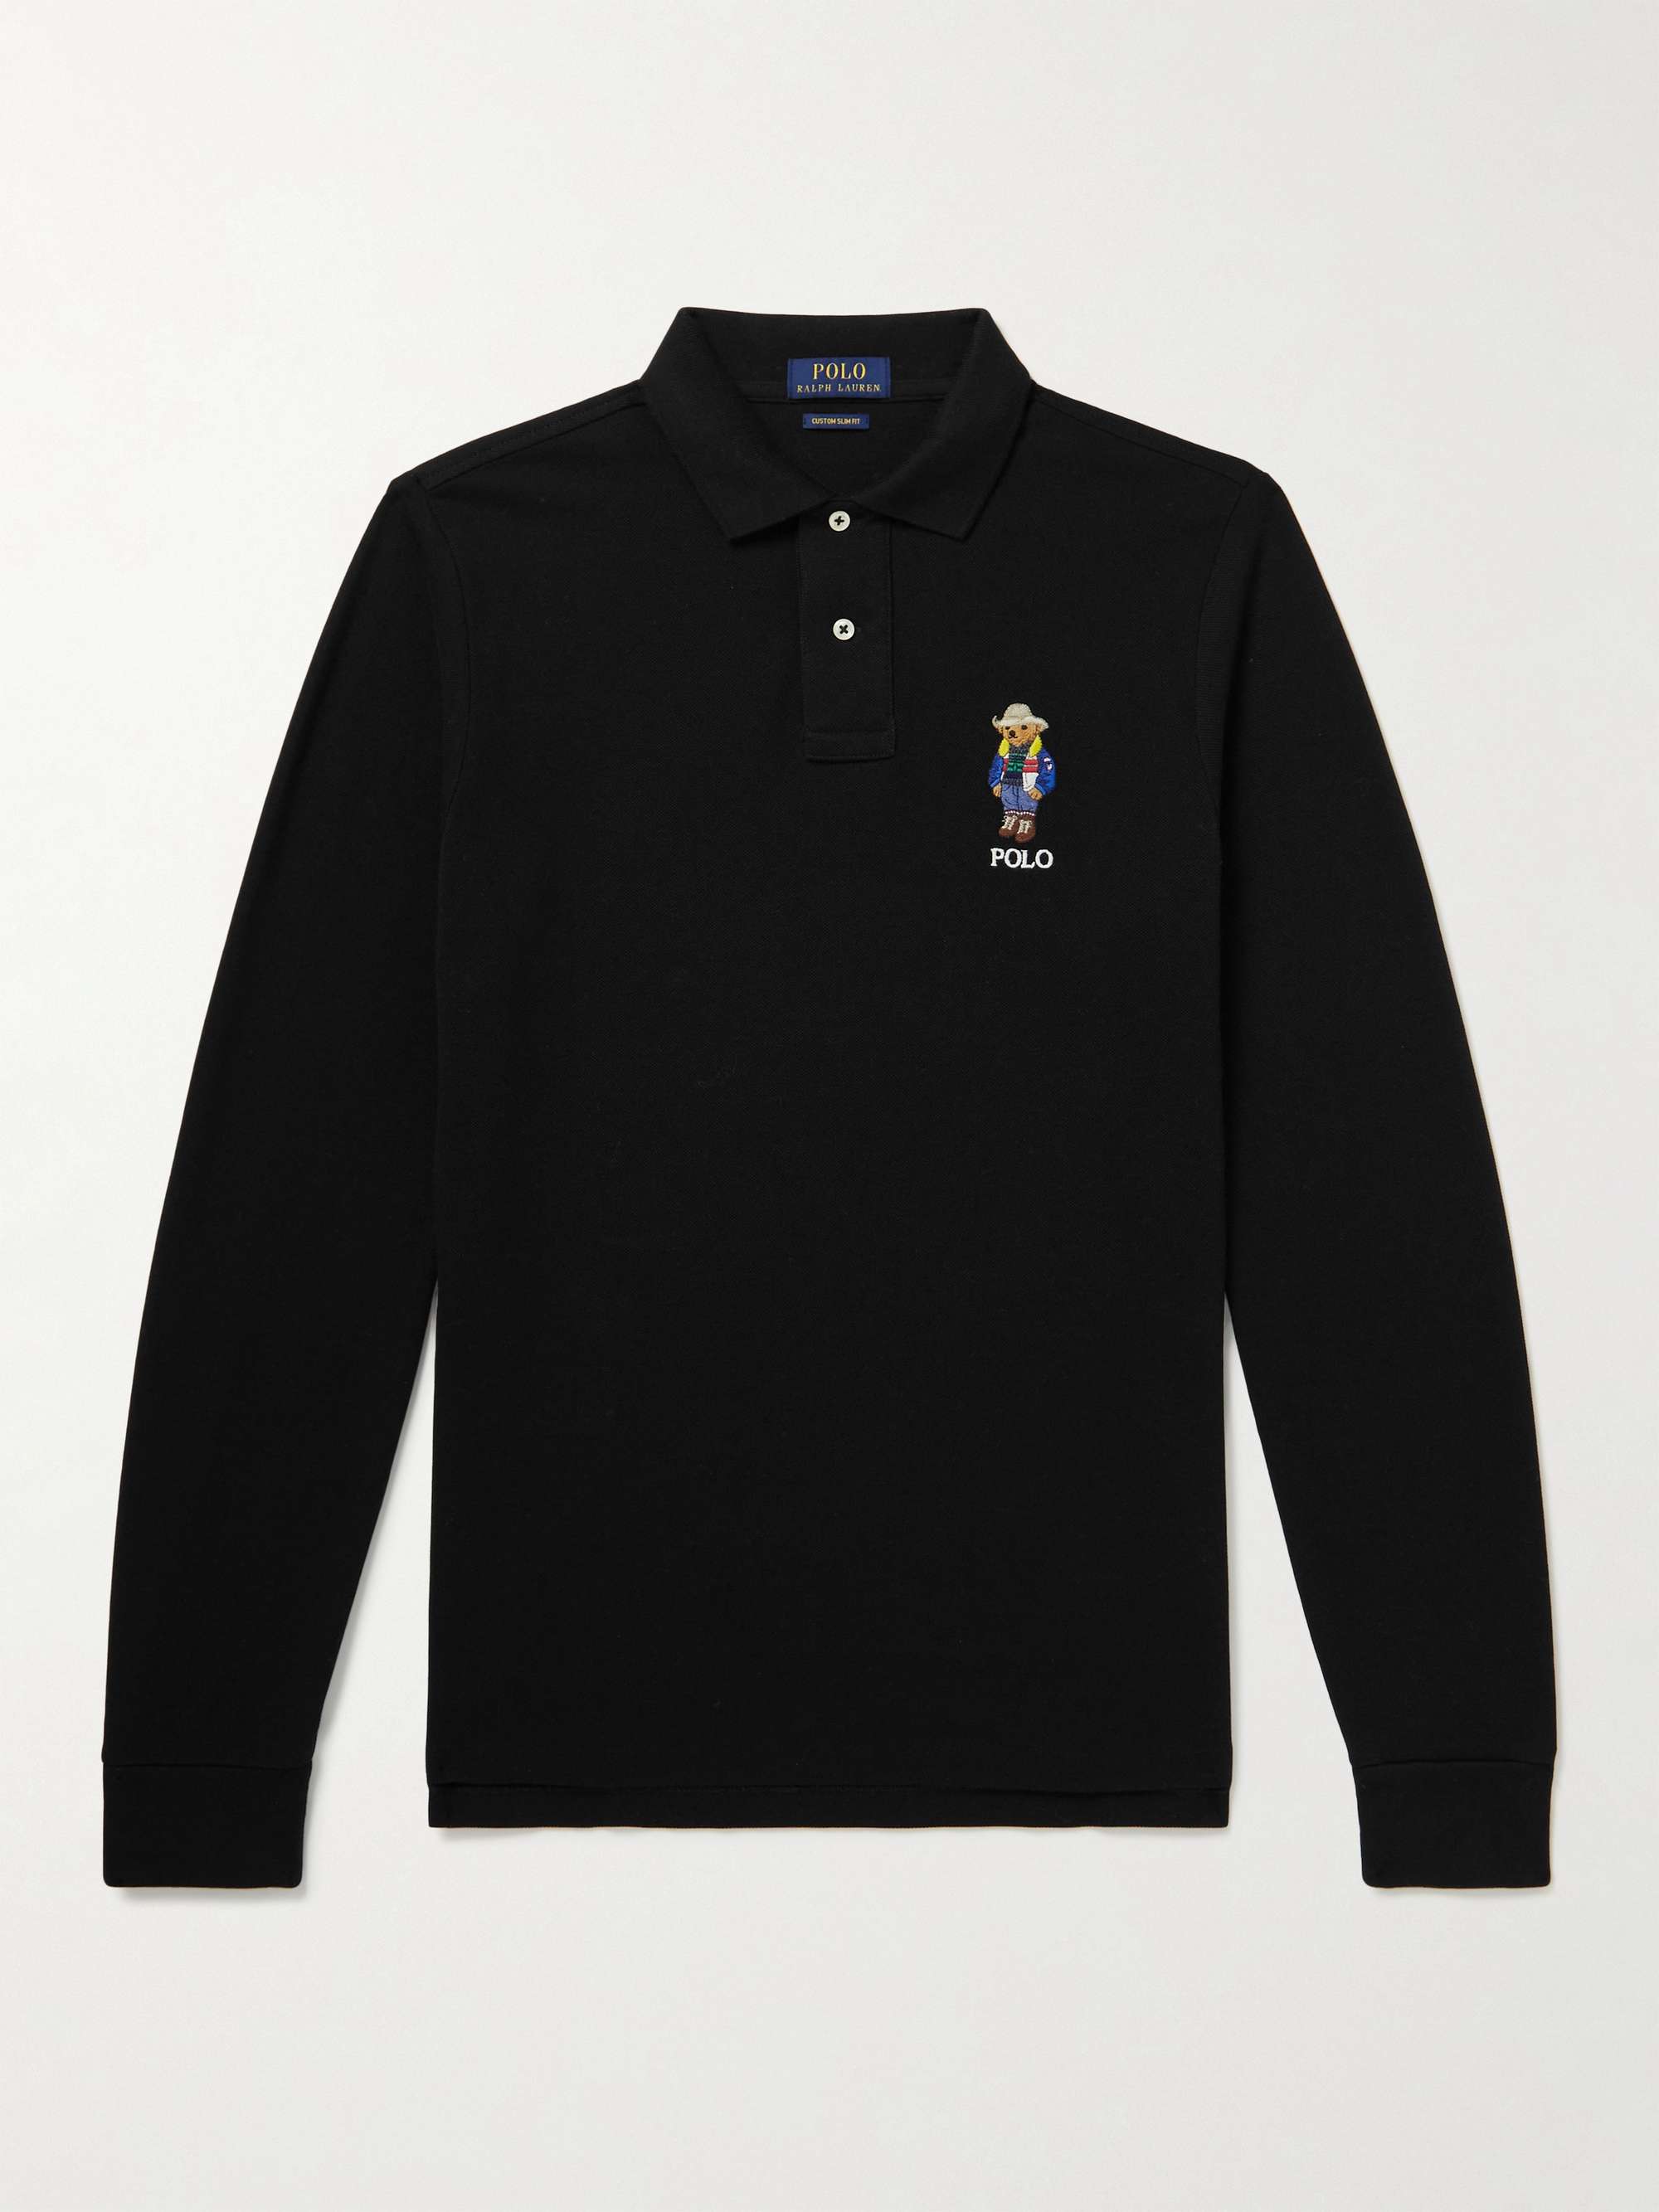 Polo RALPH LAUREN Slim-Fit Logo-Embroidered Cotton-Pique Polo Shirt,Black